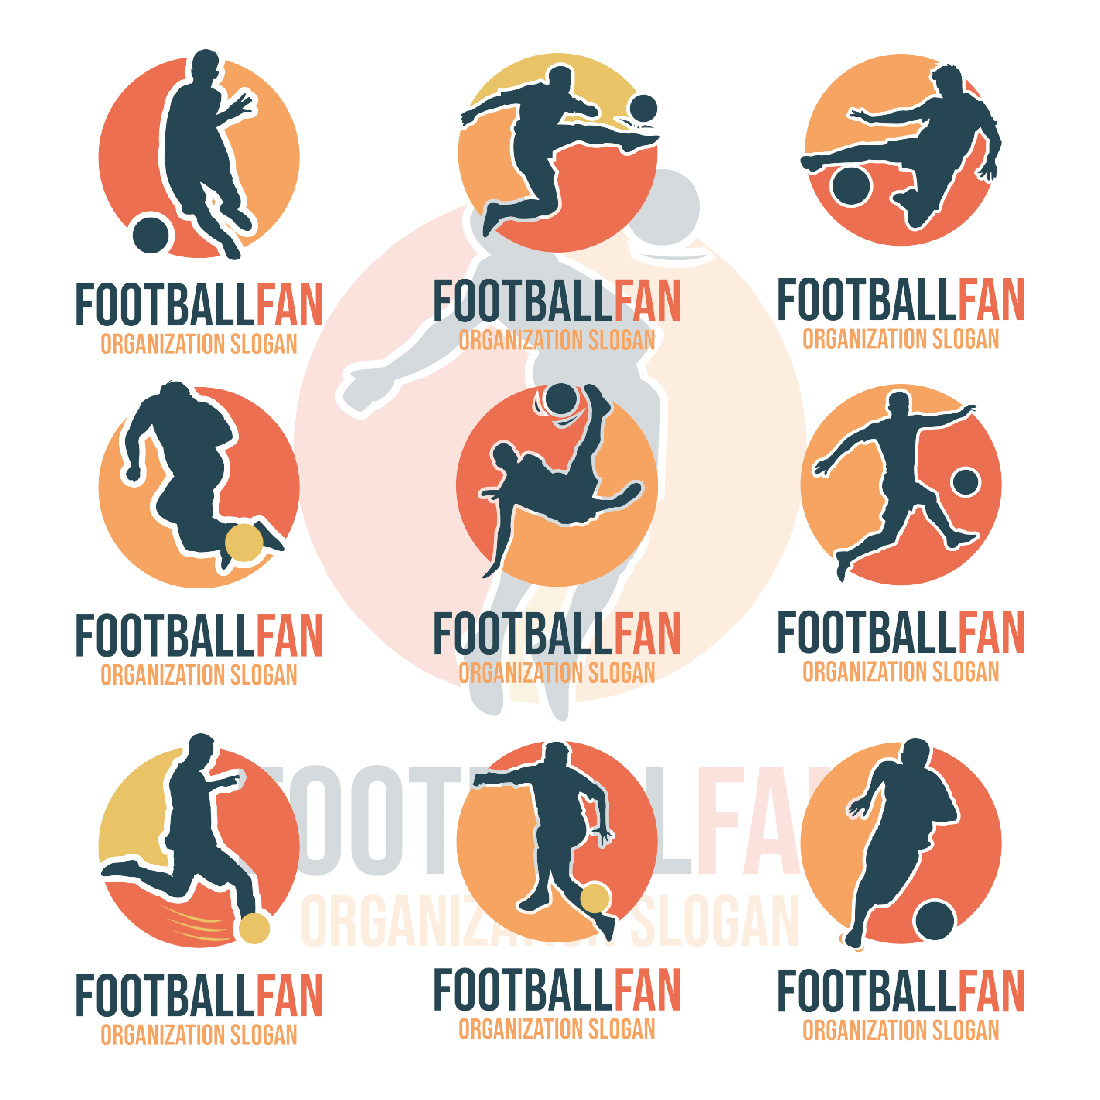 10 Football Fan Logos Cover Image.